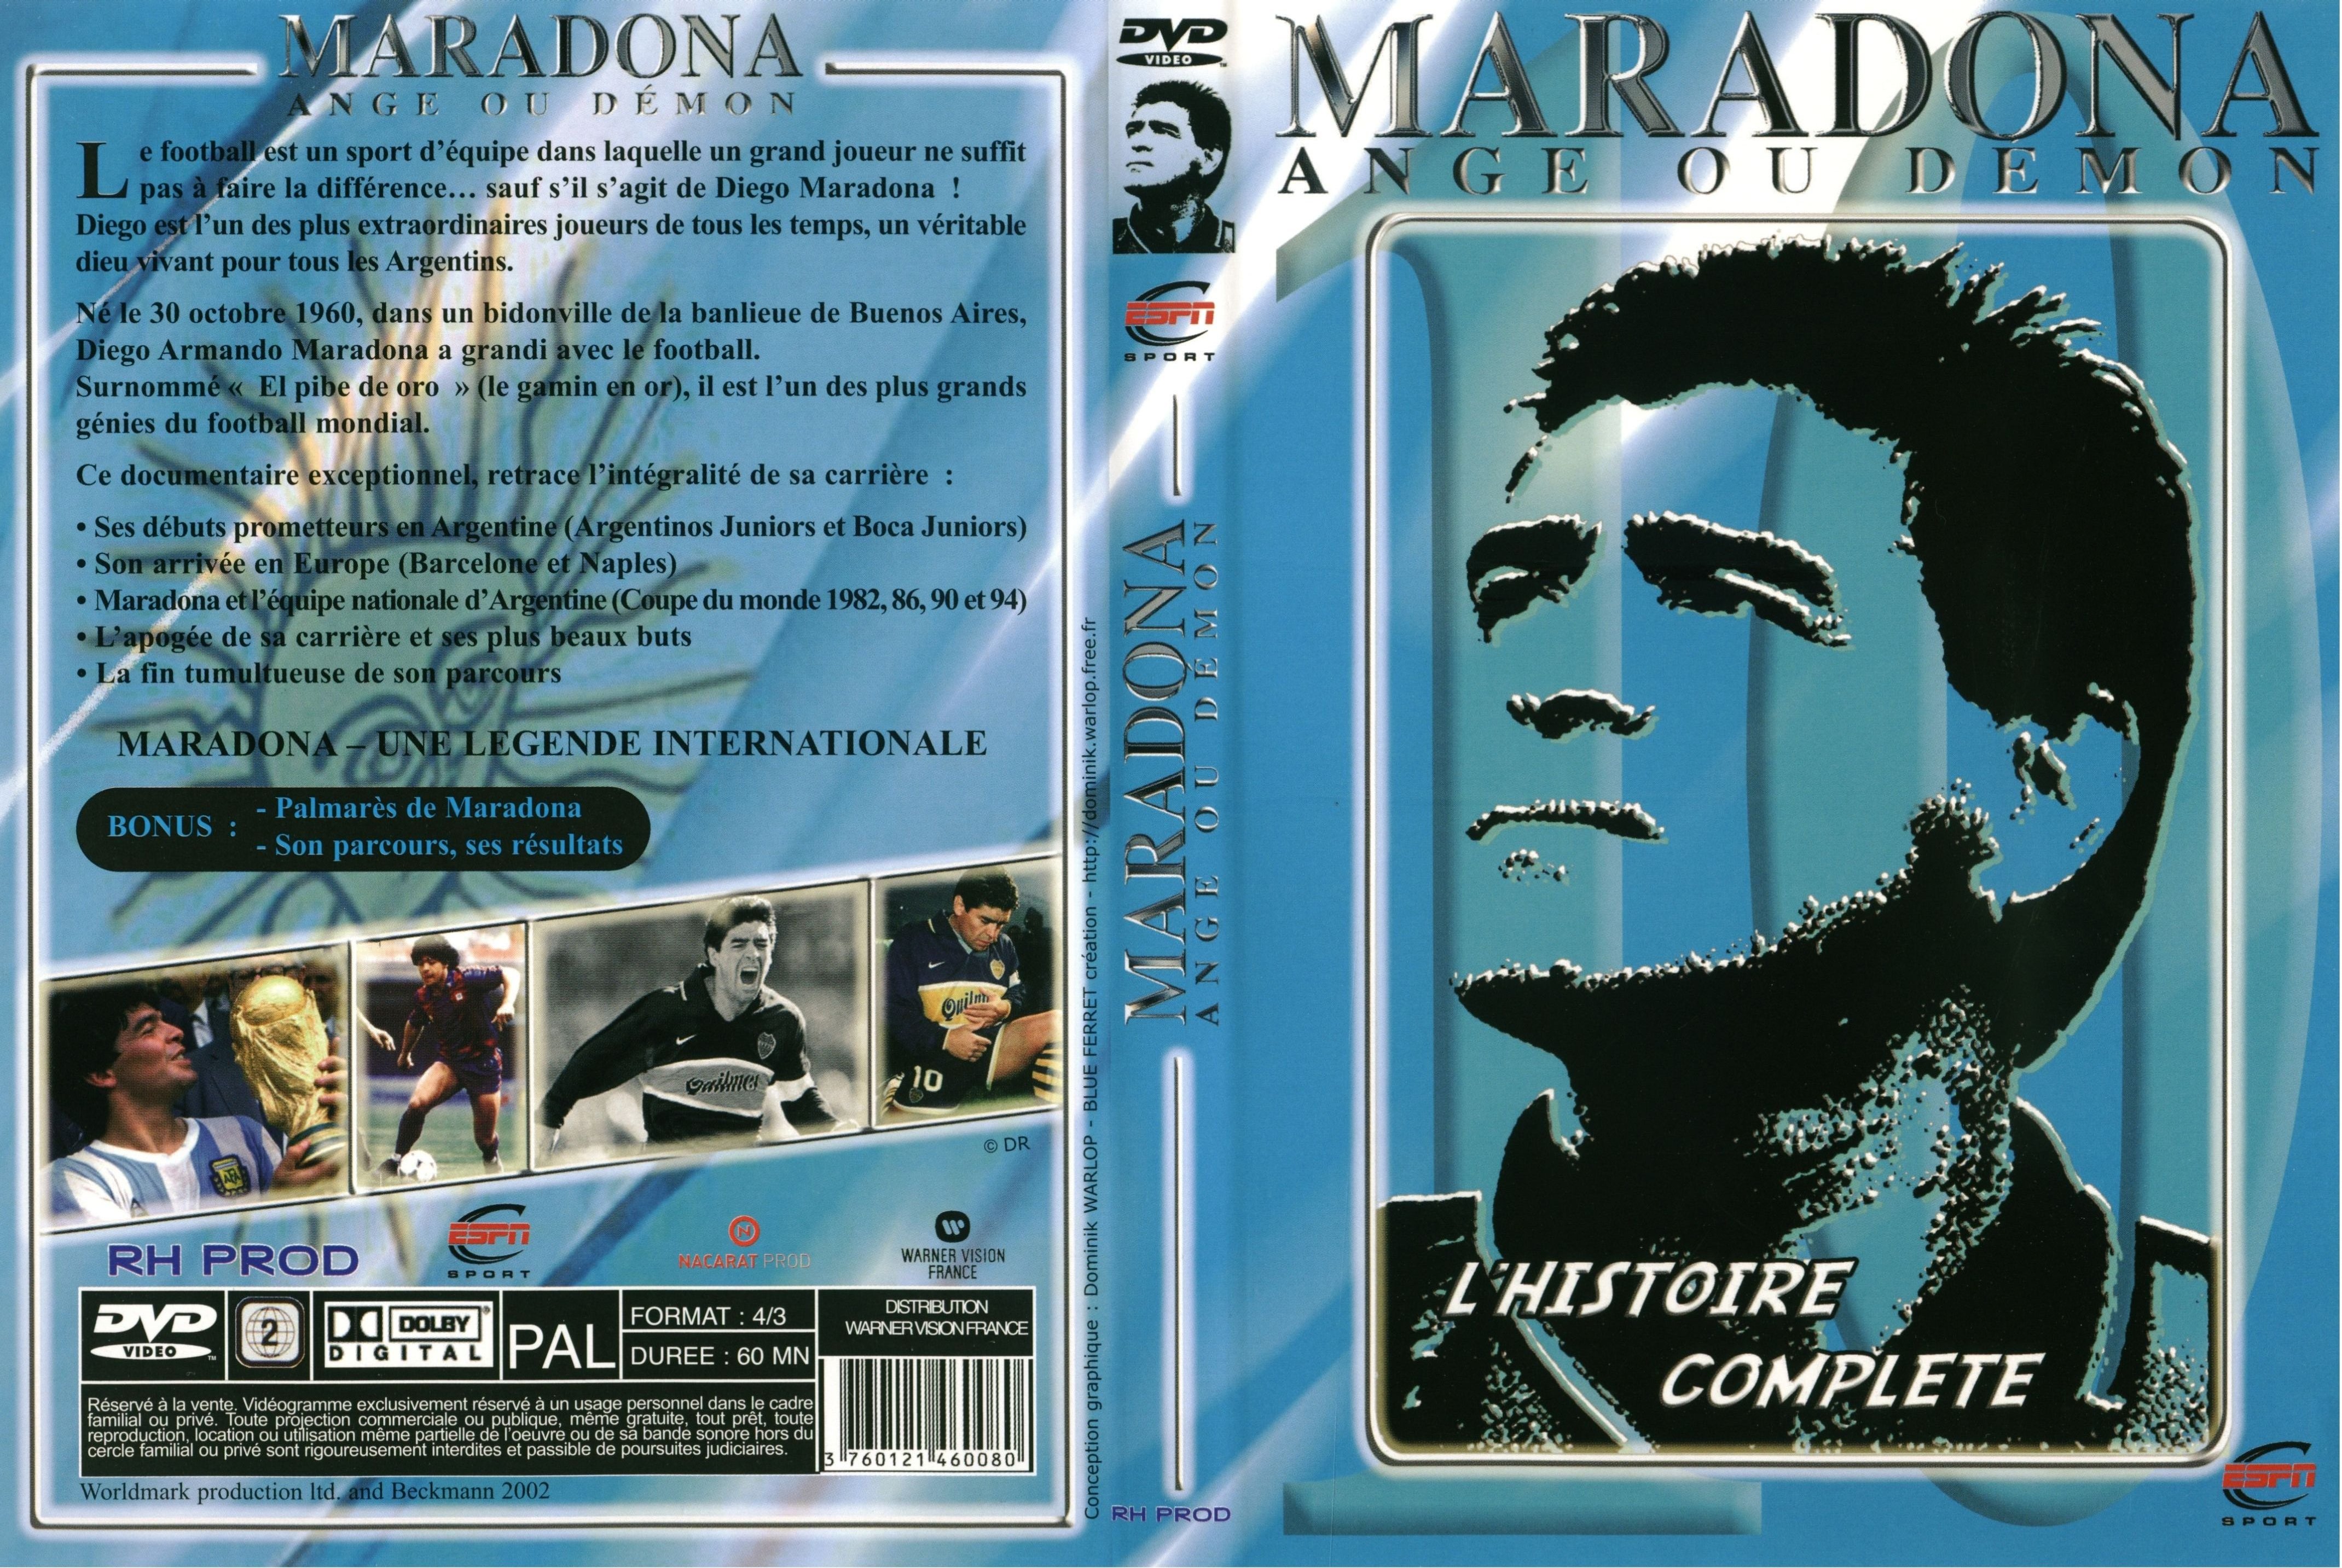 Jaquette DVD Maradona ange ou dmon